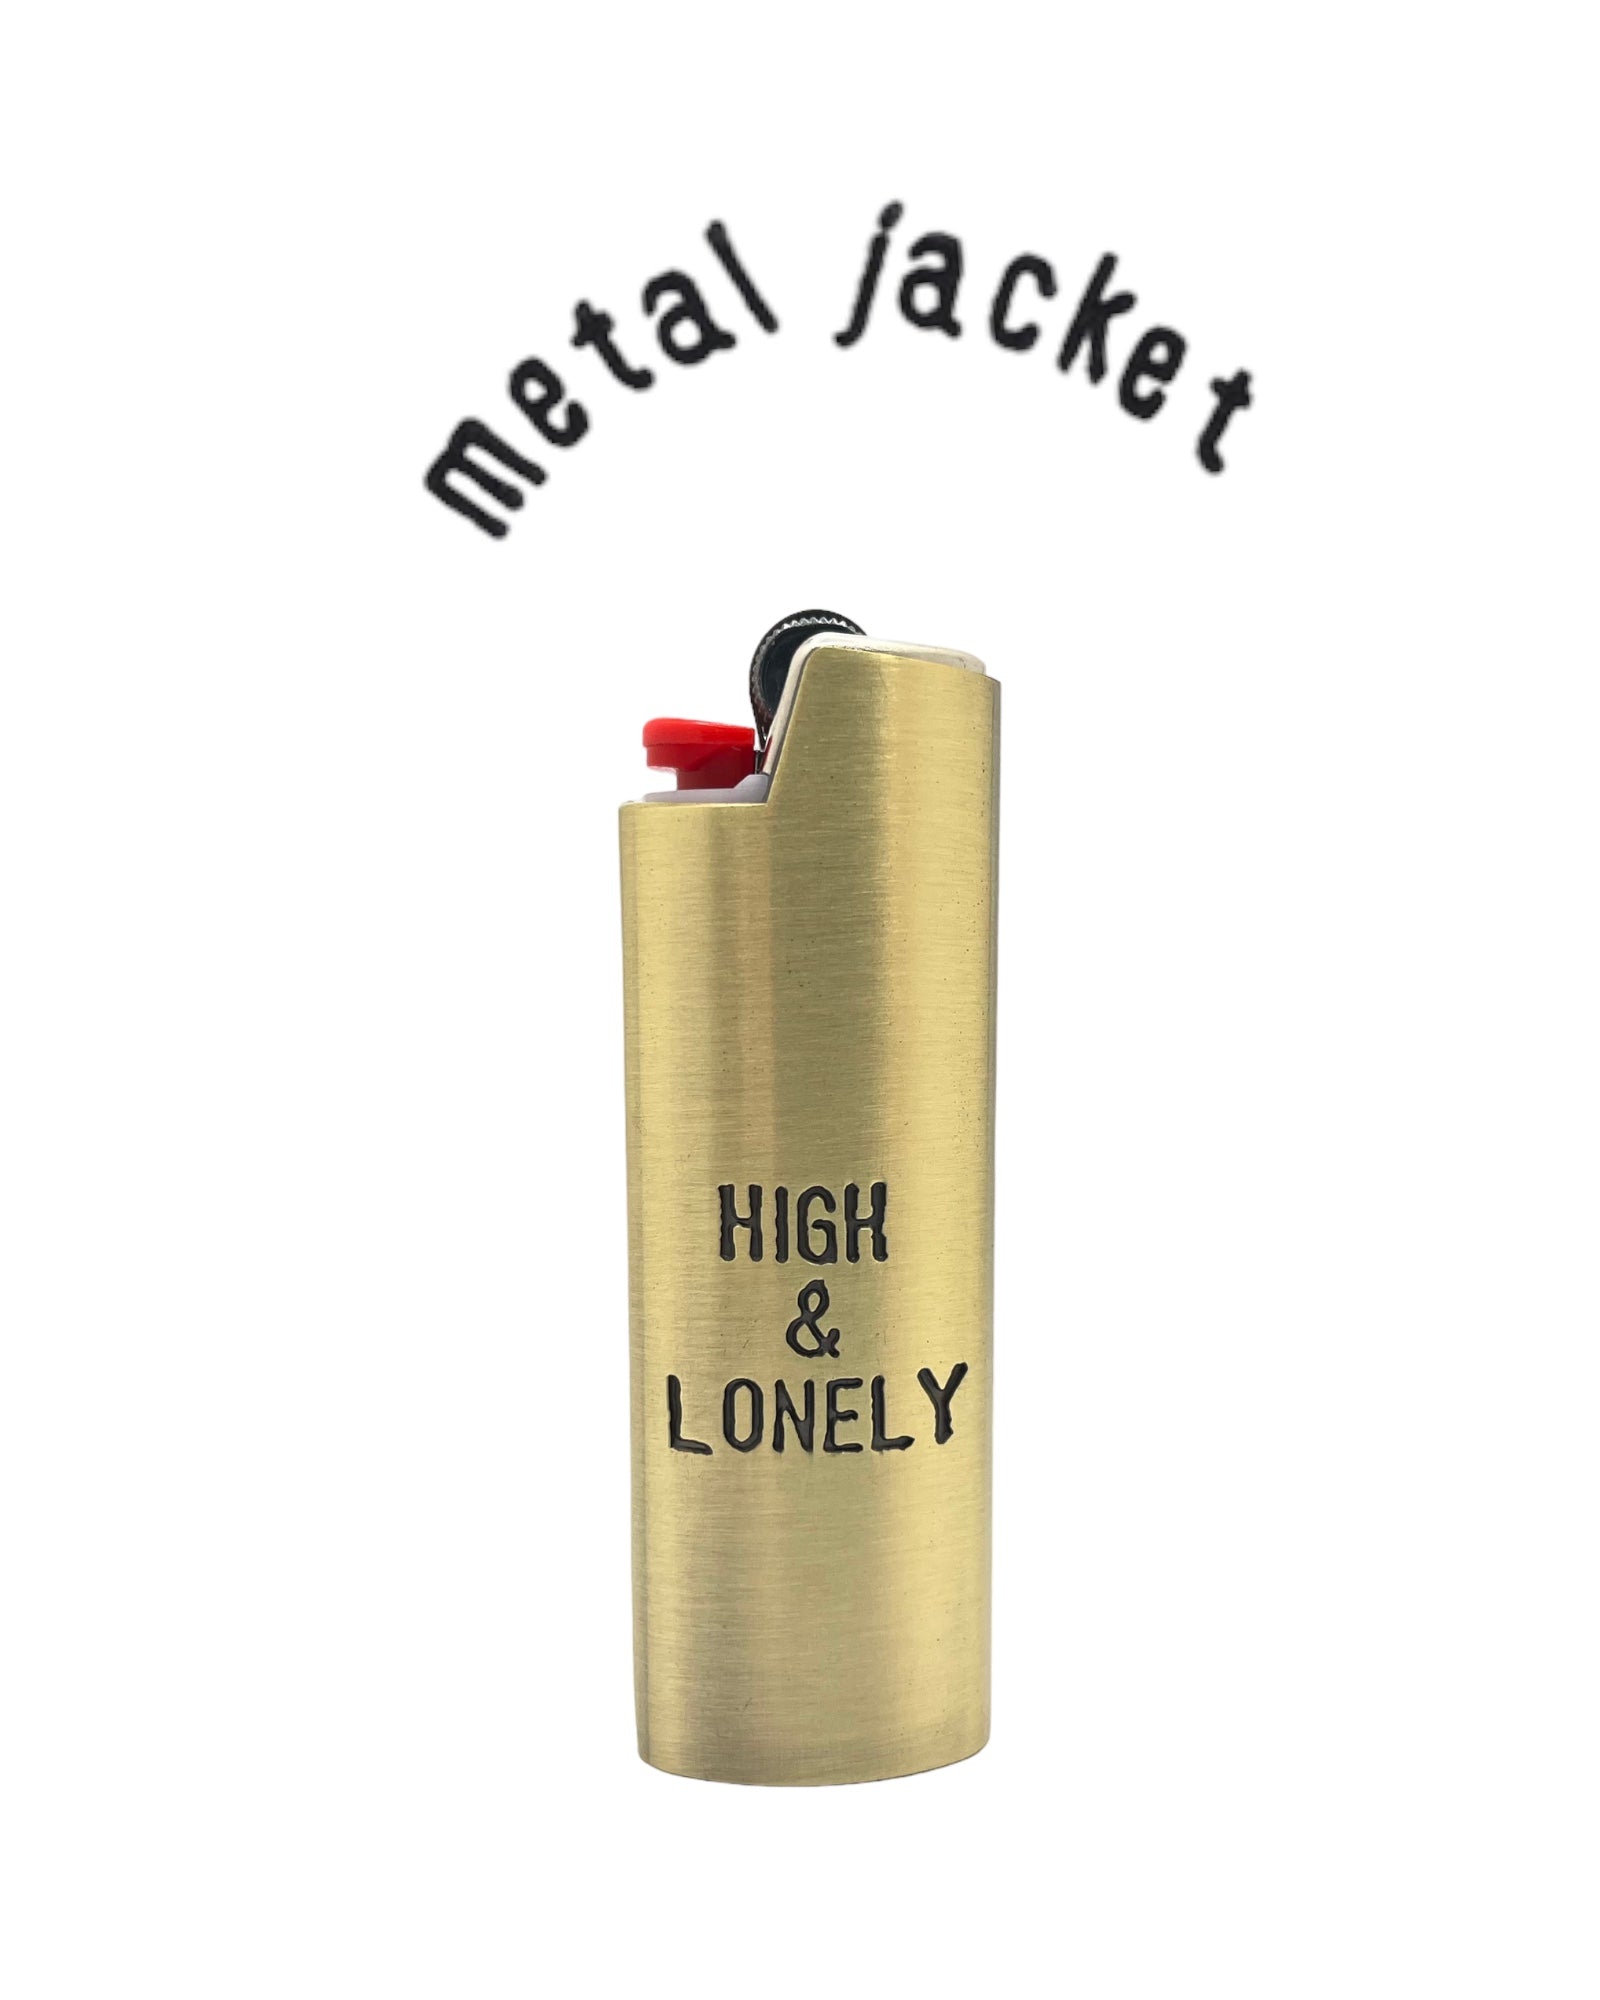 metal lighter case